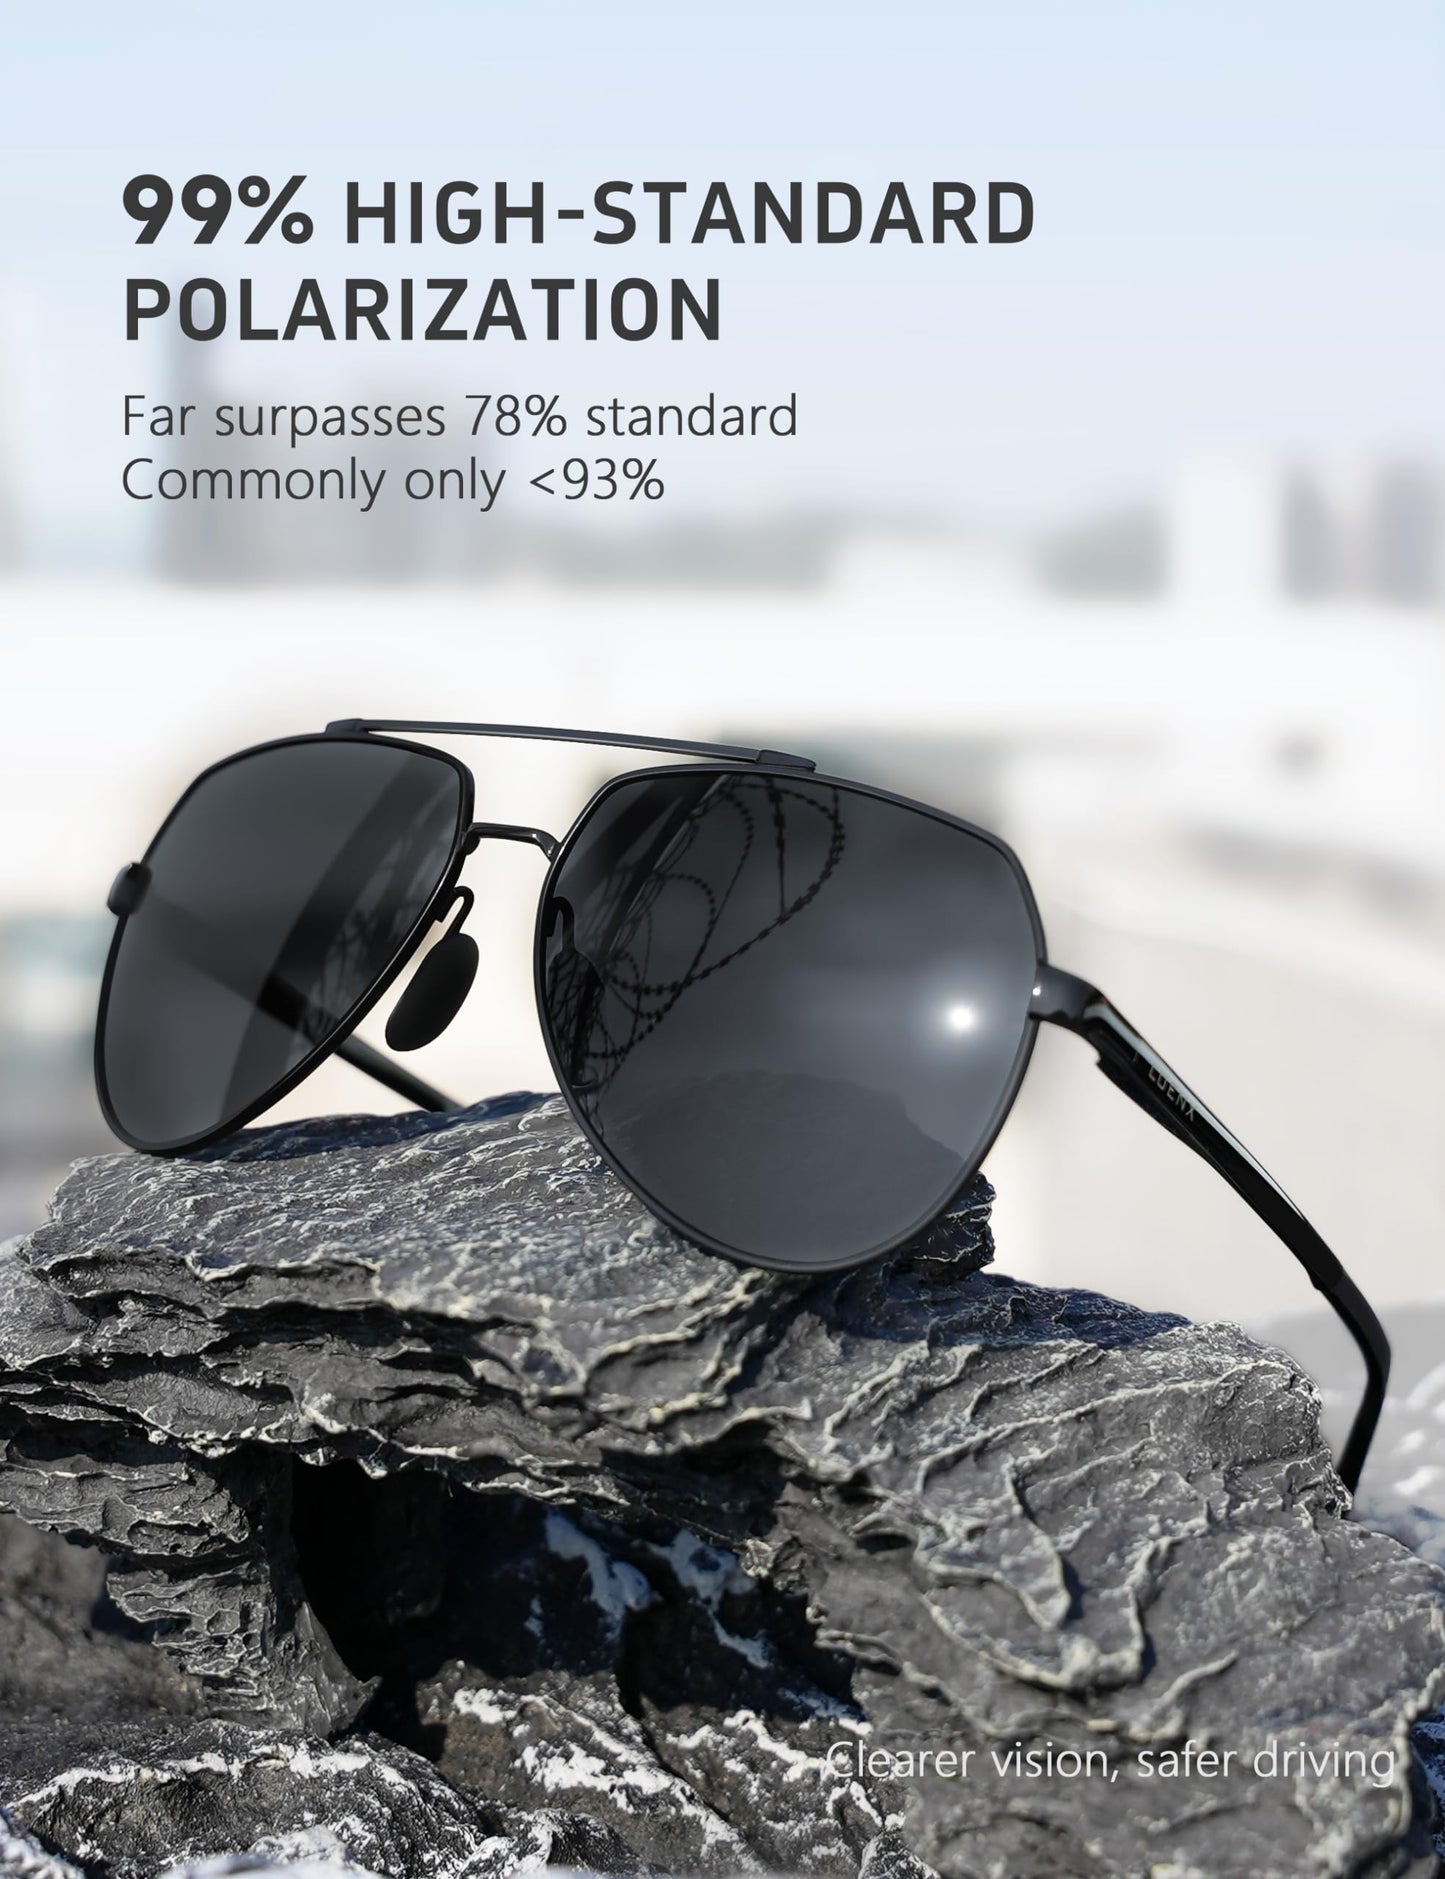 LUENX Aviator Sunglasses for Men Women Polarized New Shades Large Metal Frame - UV 400 Protection